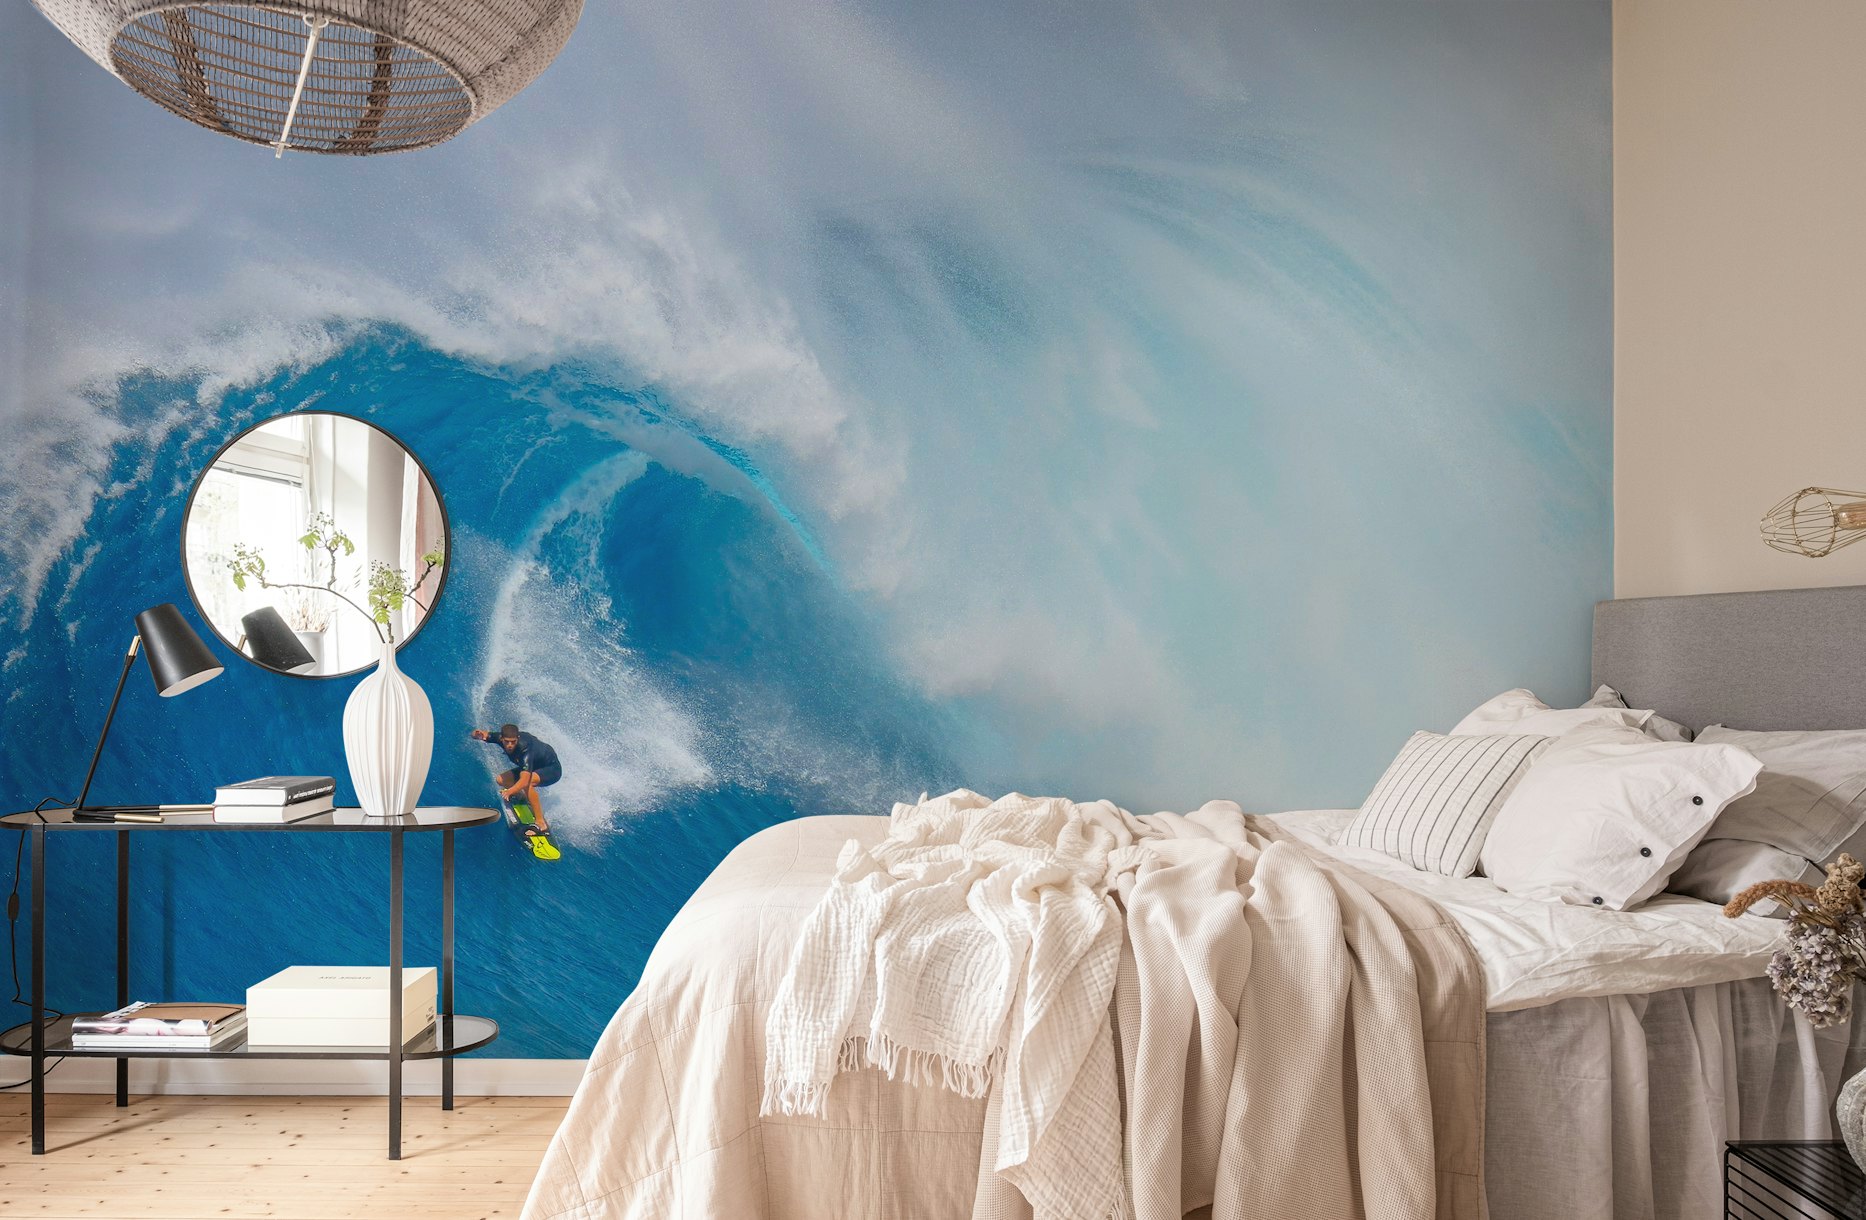 Surfing Jaws wallpaper